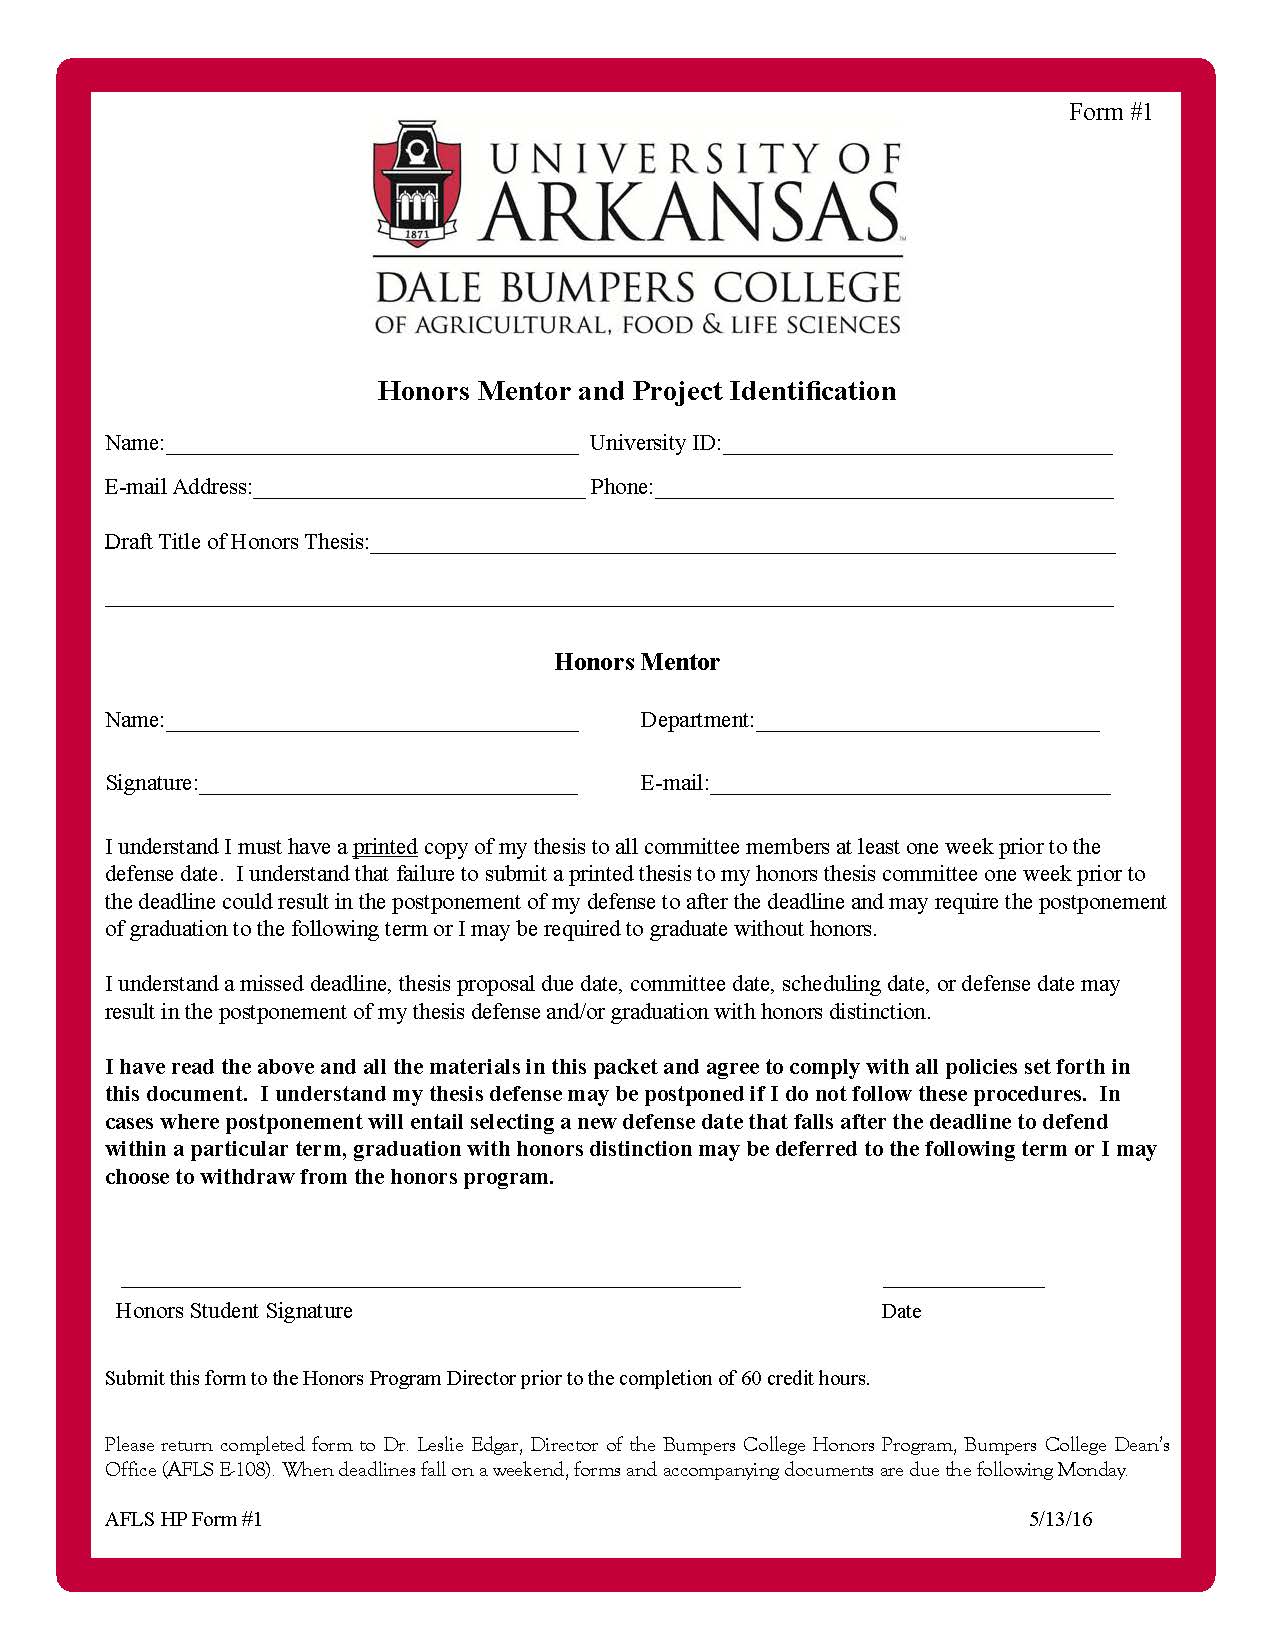 Forms University Of Arkansas